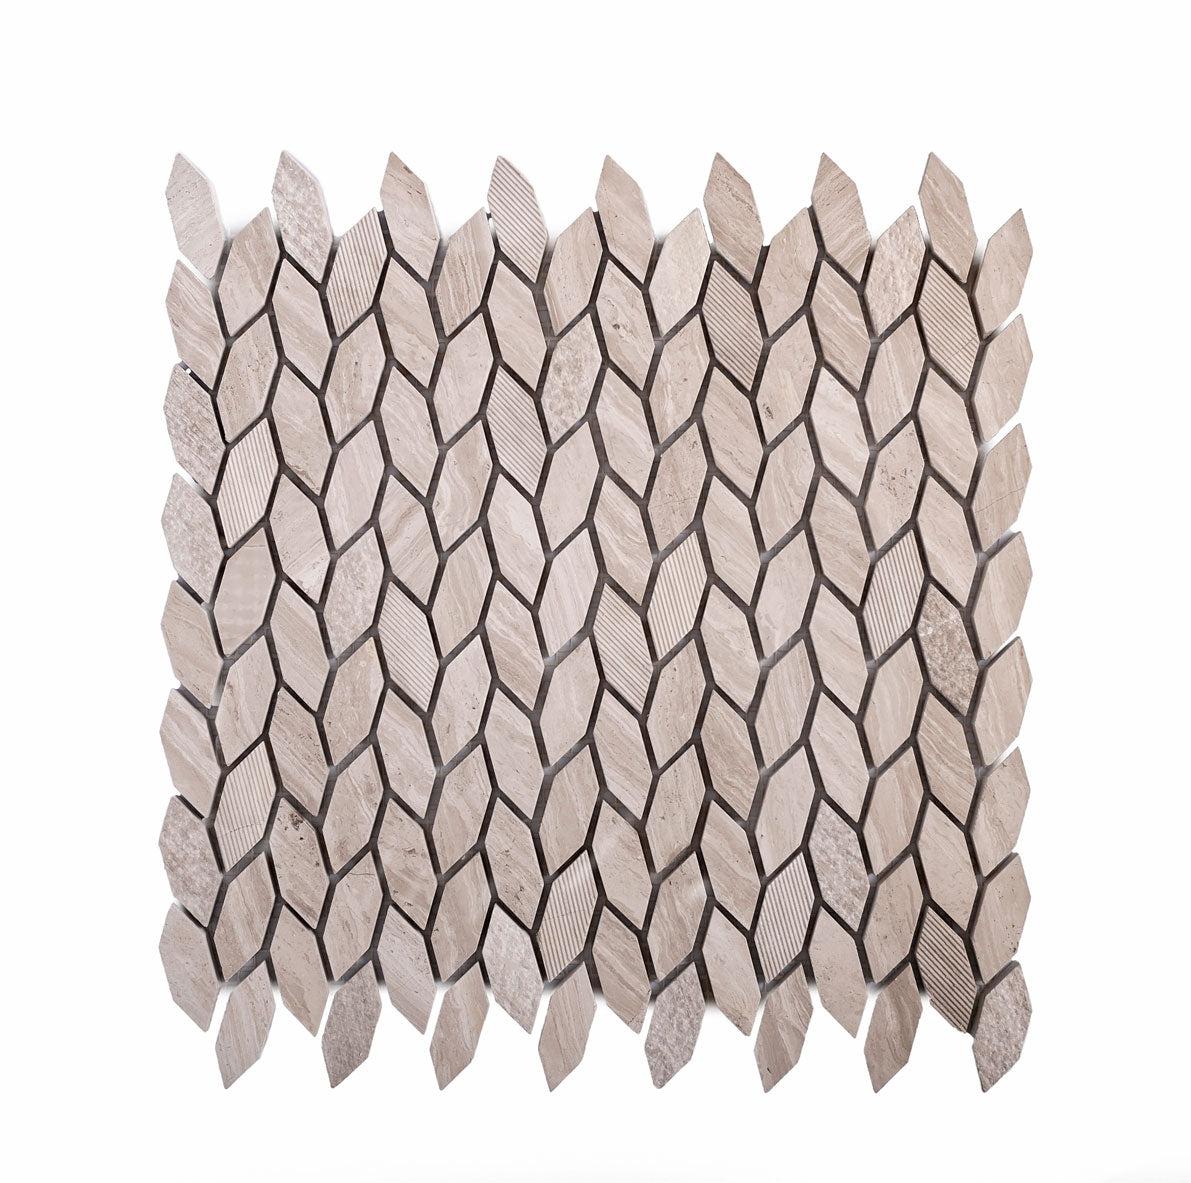 Textured Wooden Beige Leaf Marble Mosaic Tile Sample